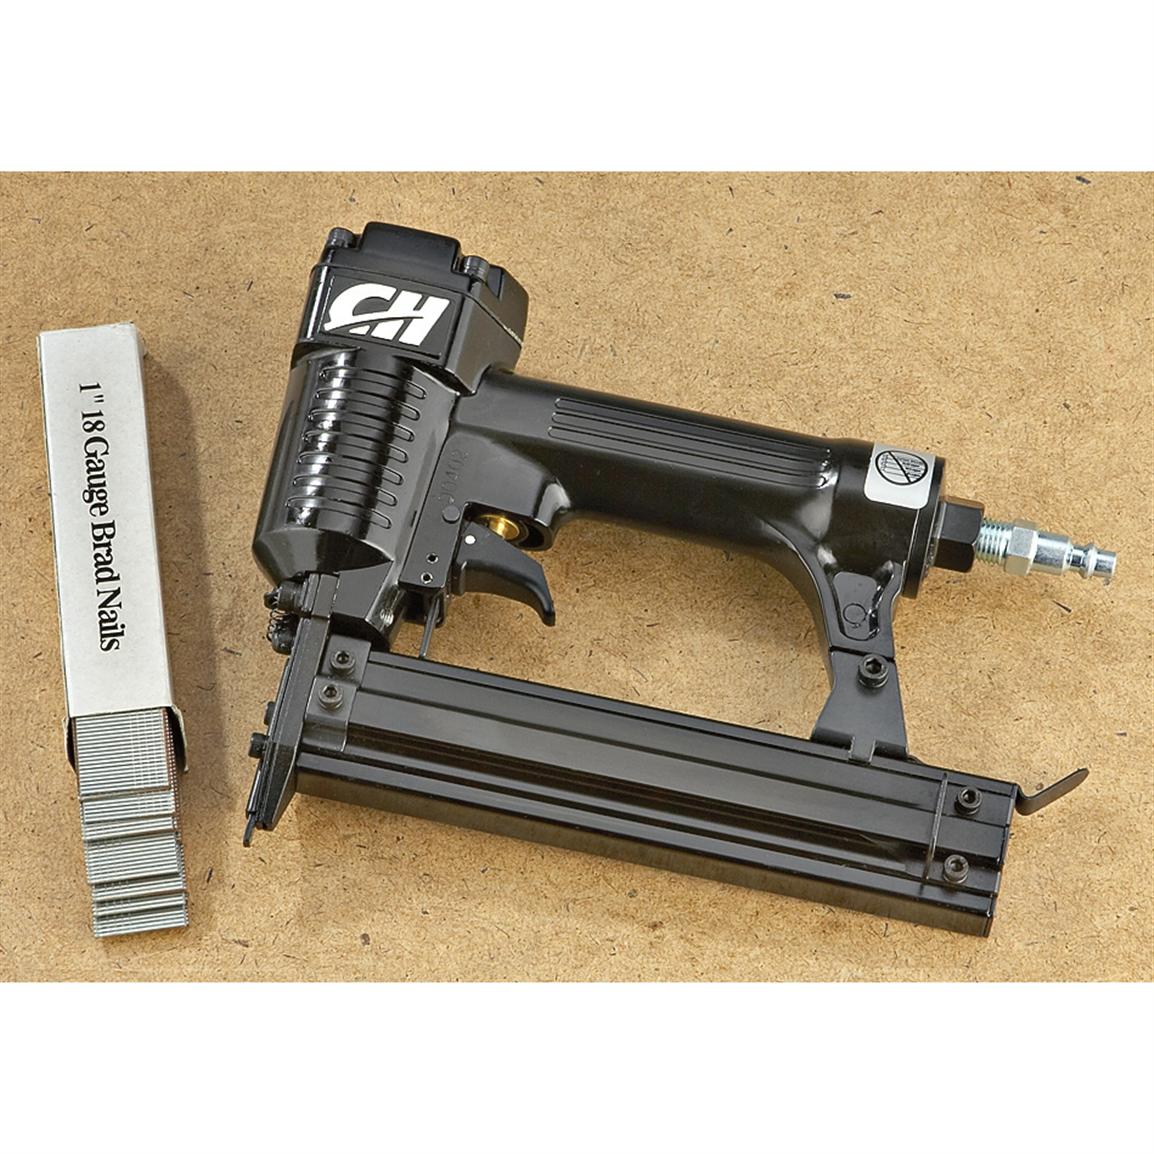 Campbell hausfeld chn10500 nail gun user manual free